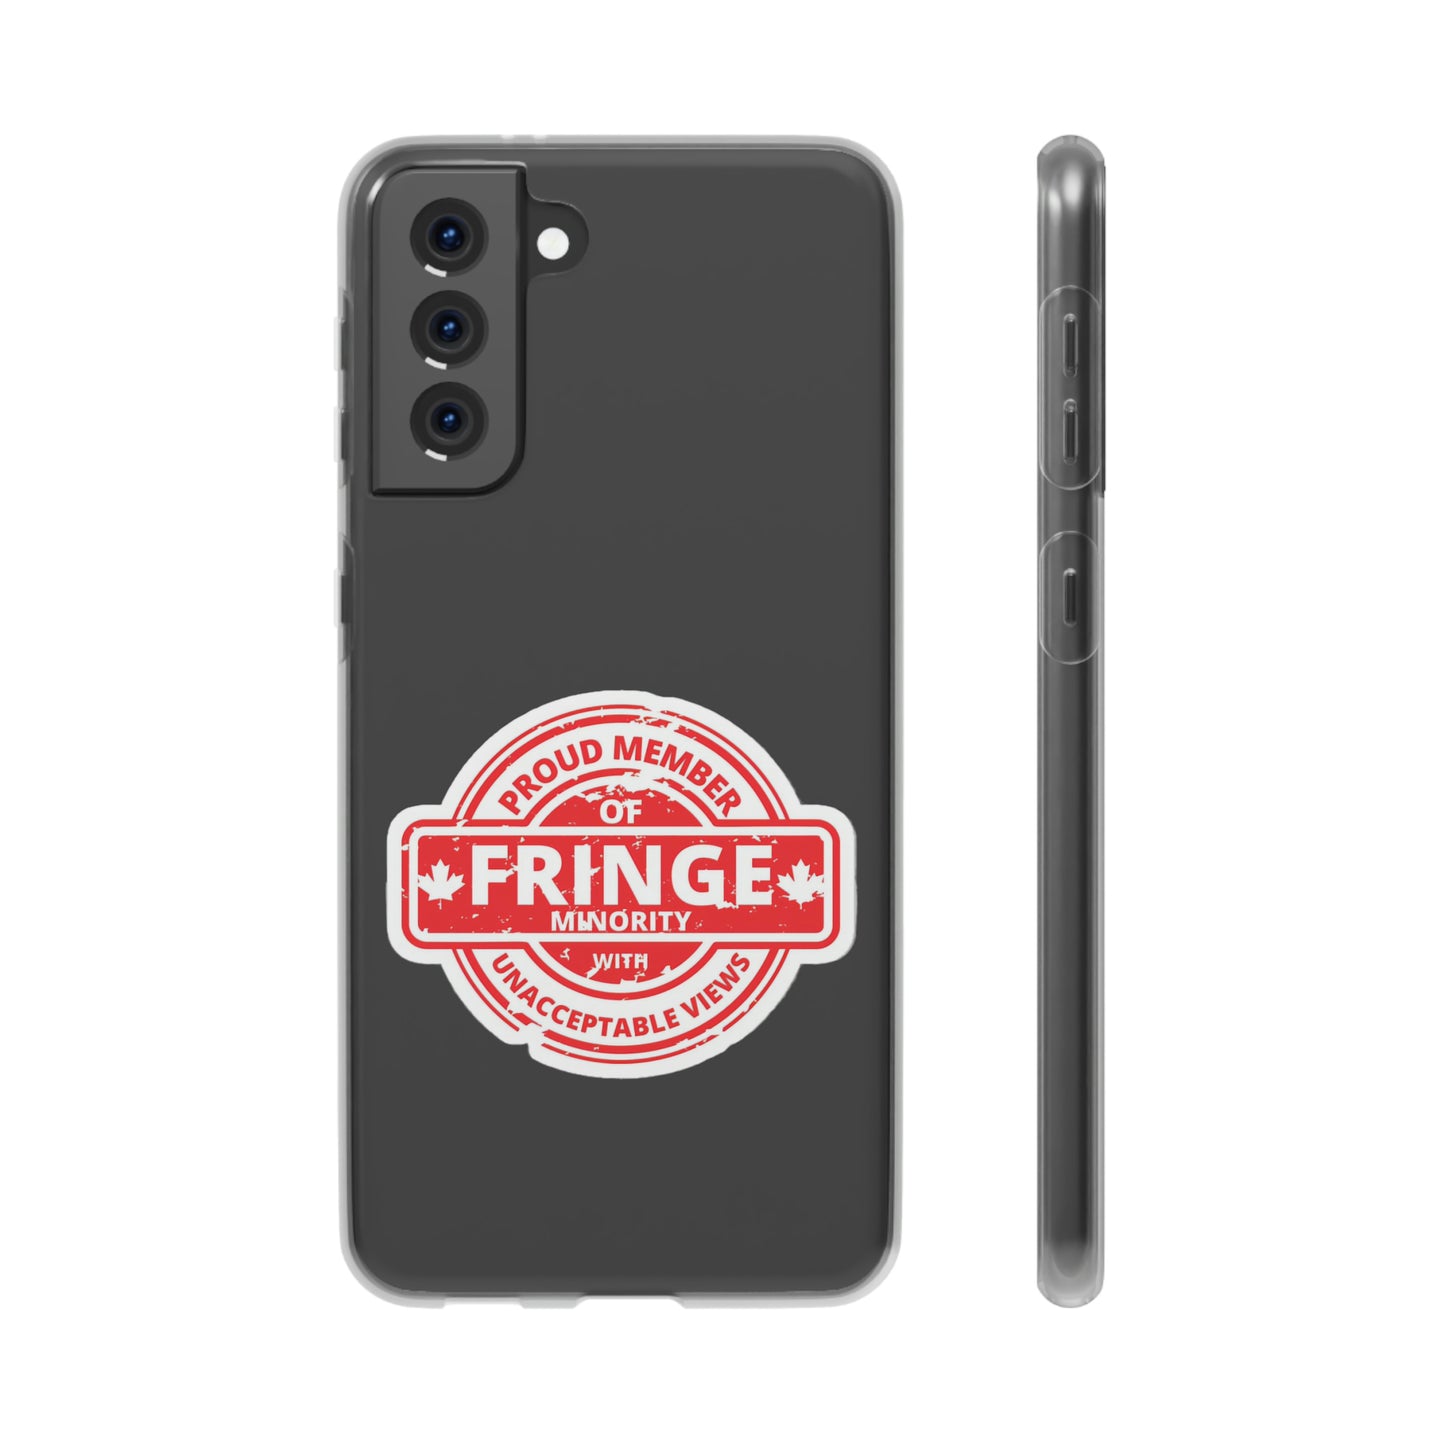 Fringe Minority Samsung Flexi Cases